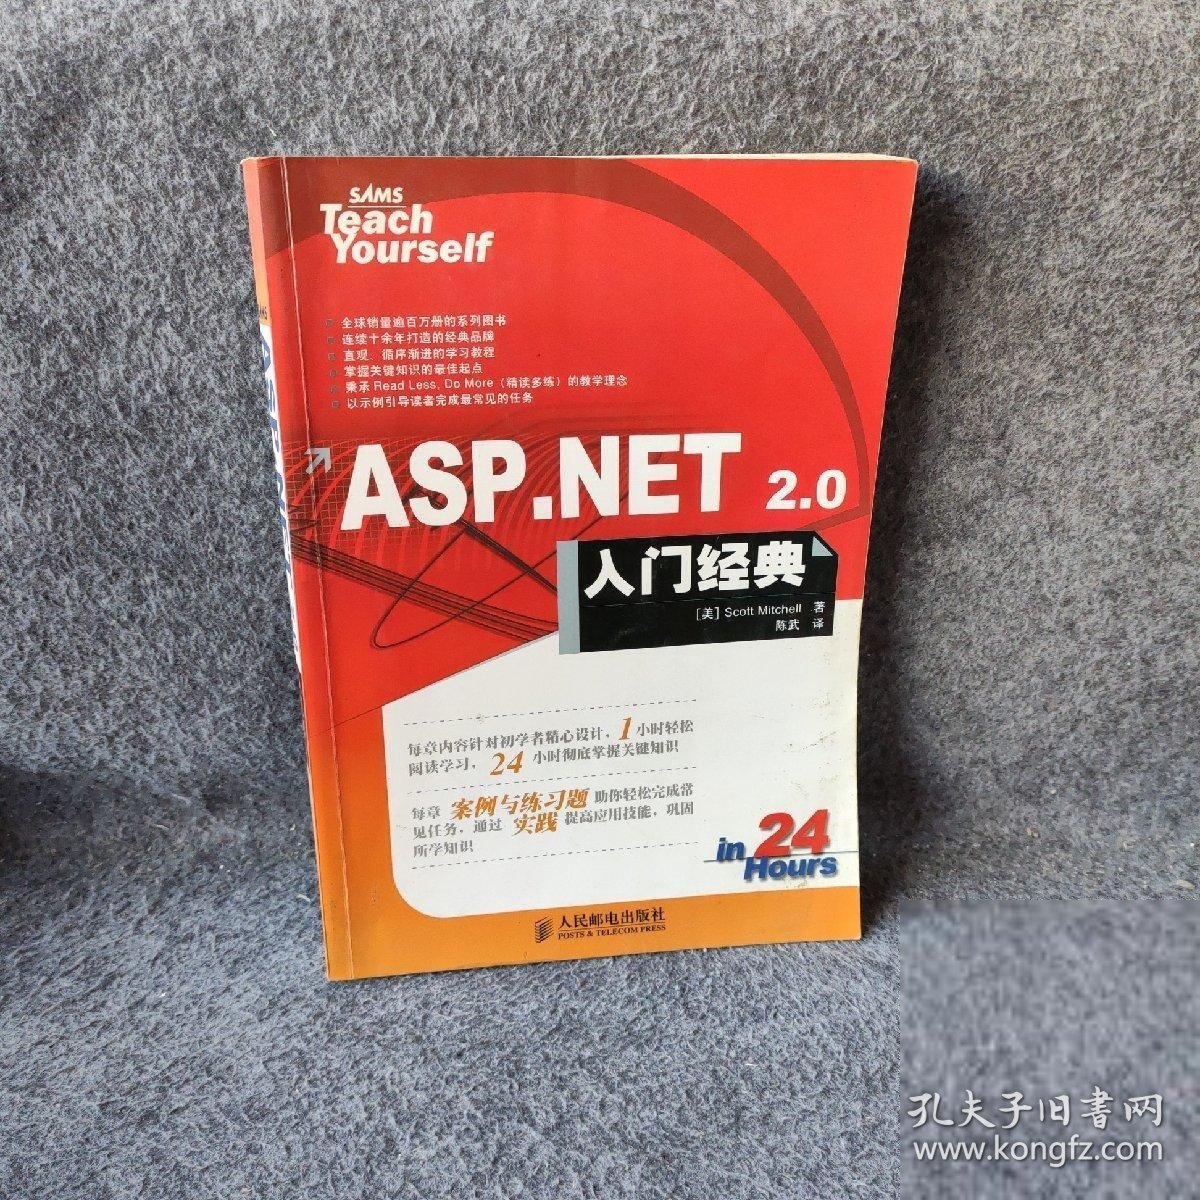 ASP.NET 2.0入门经典普通图书/教材教辅考试/教材/大学教材/计算机与互联网9787115158284